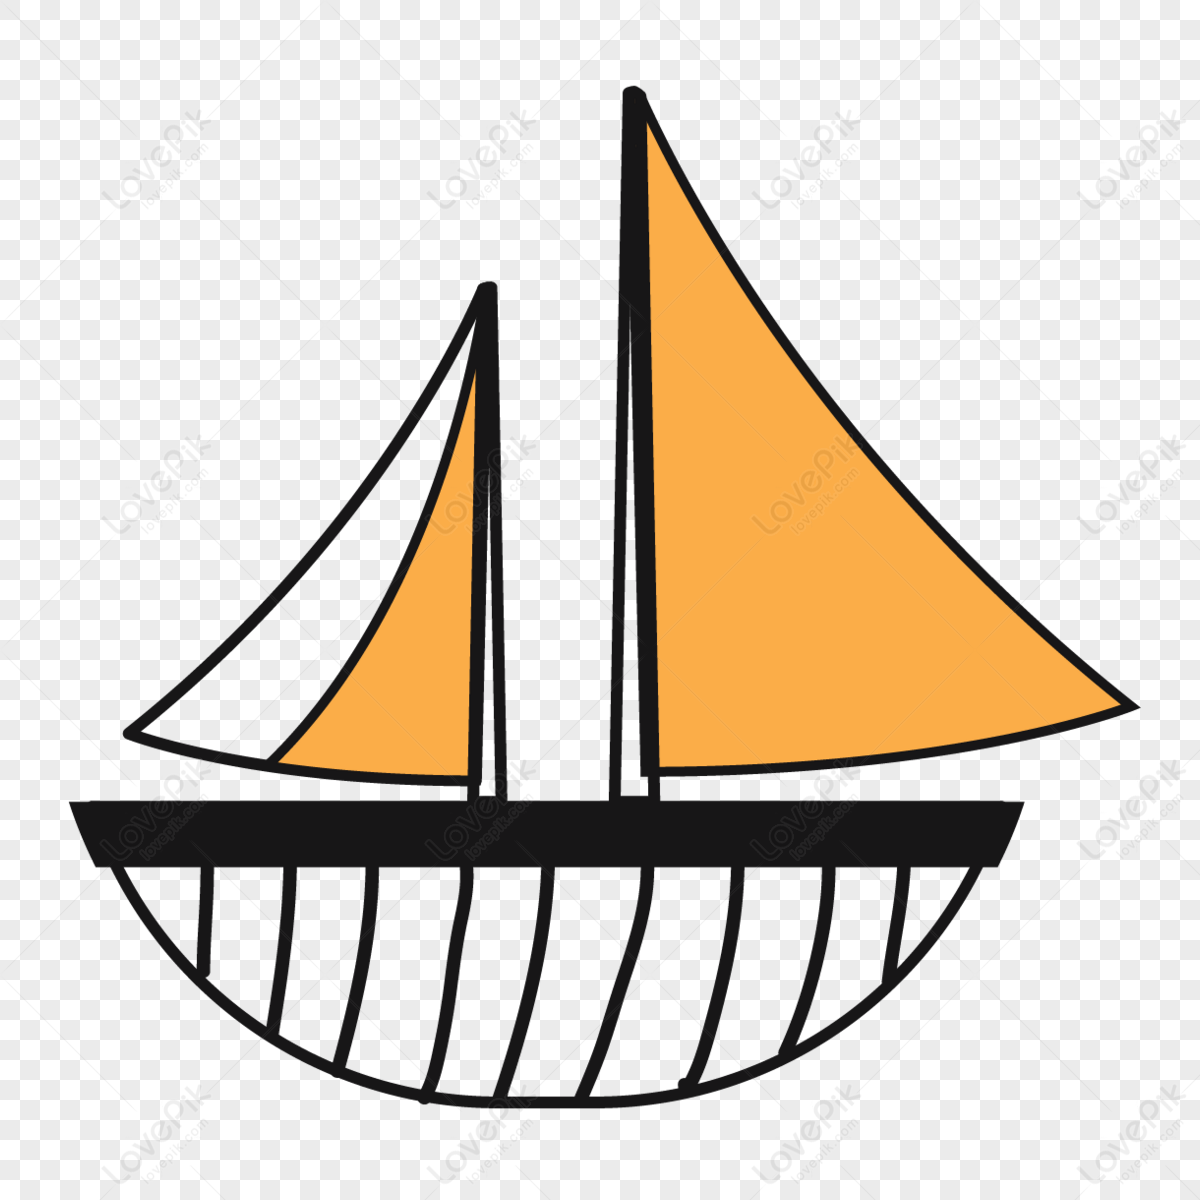 Orange flag simple boat line,sailboat,black,ferry png hd transparent image